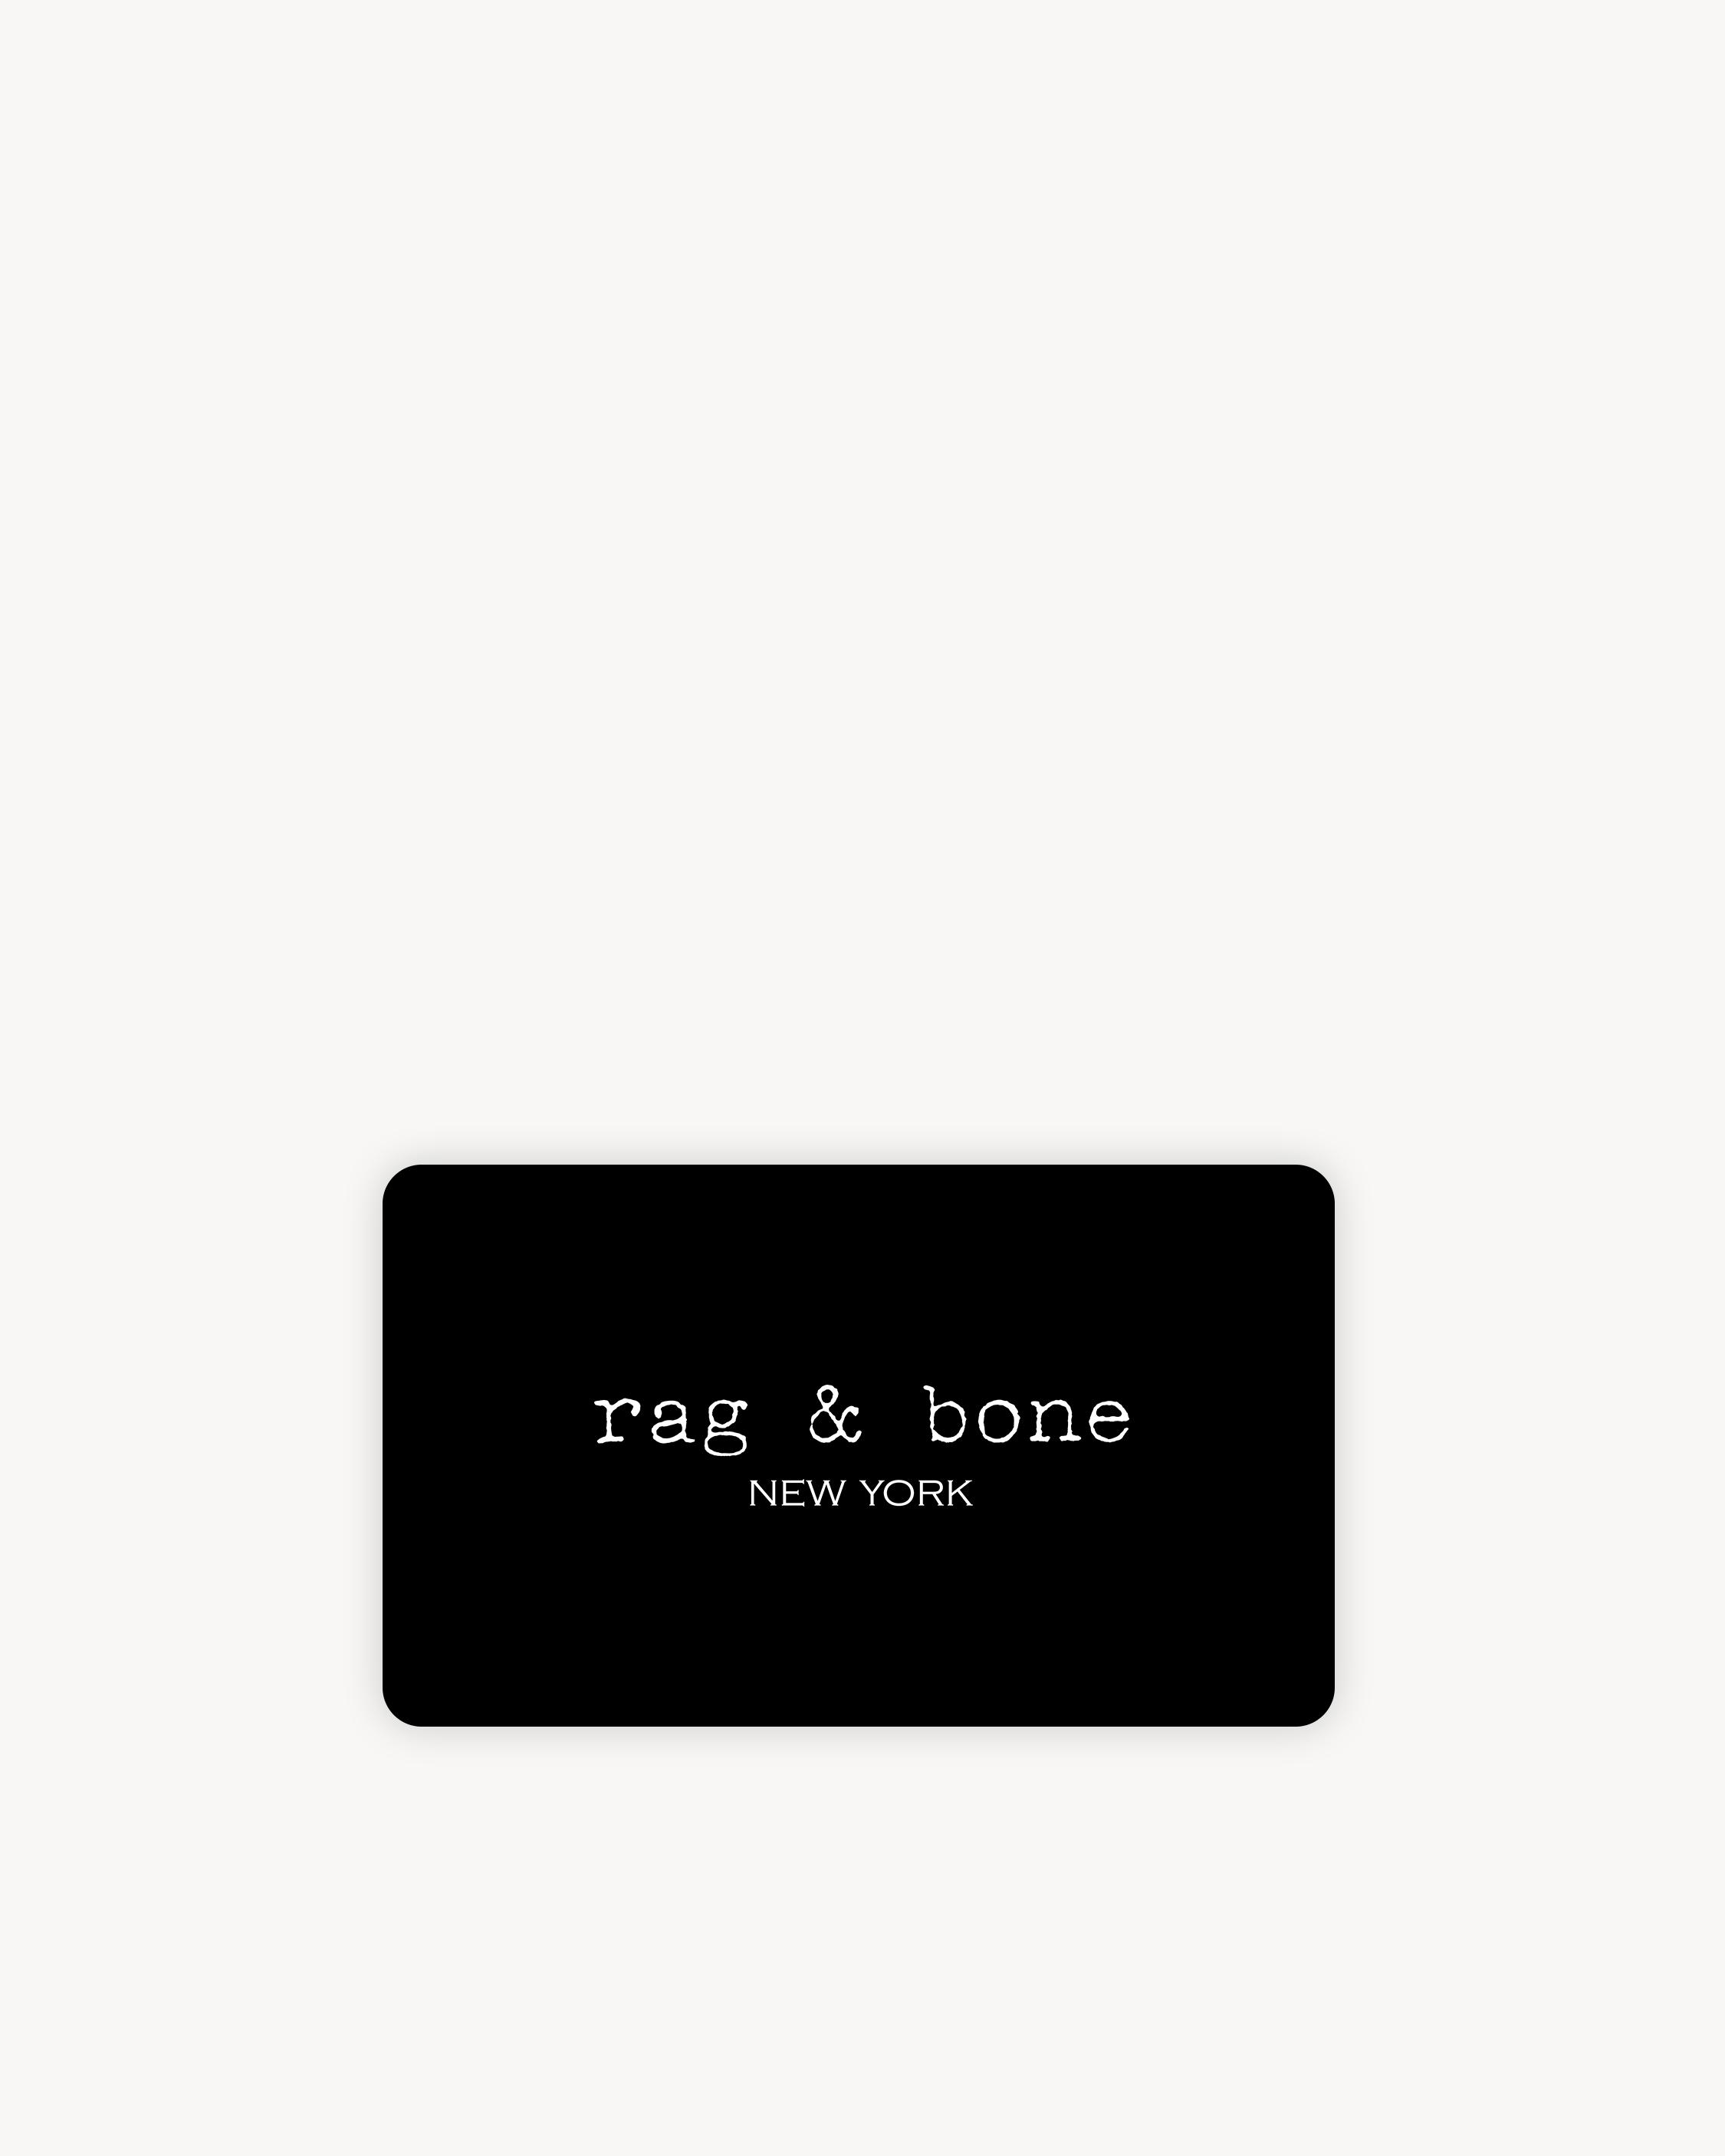 rag and bone company